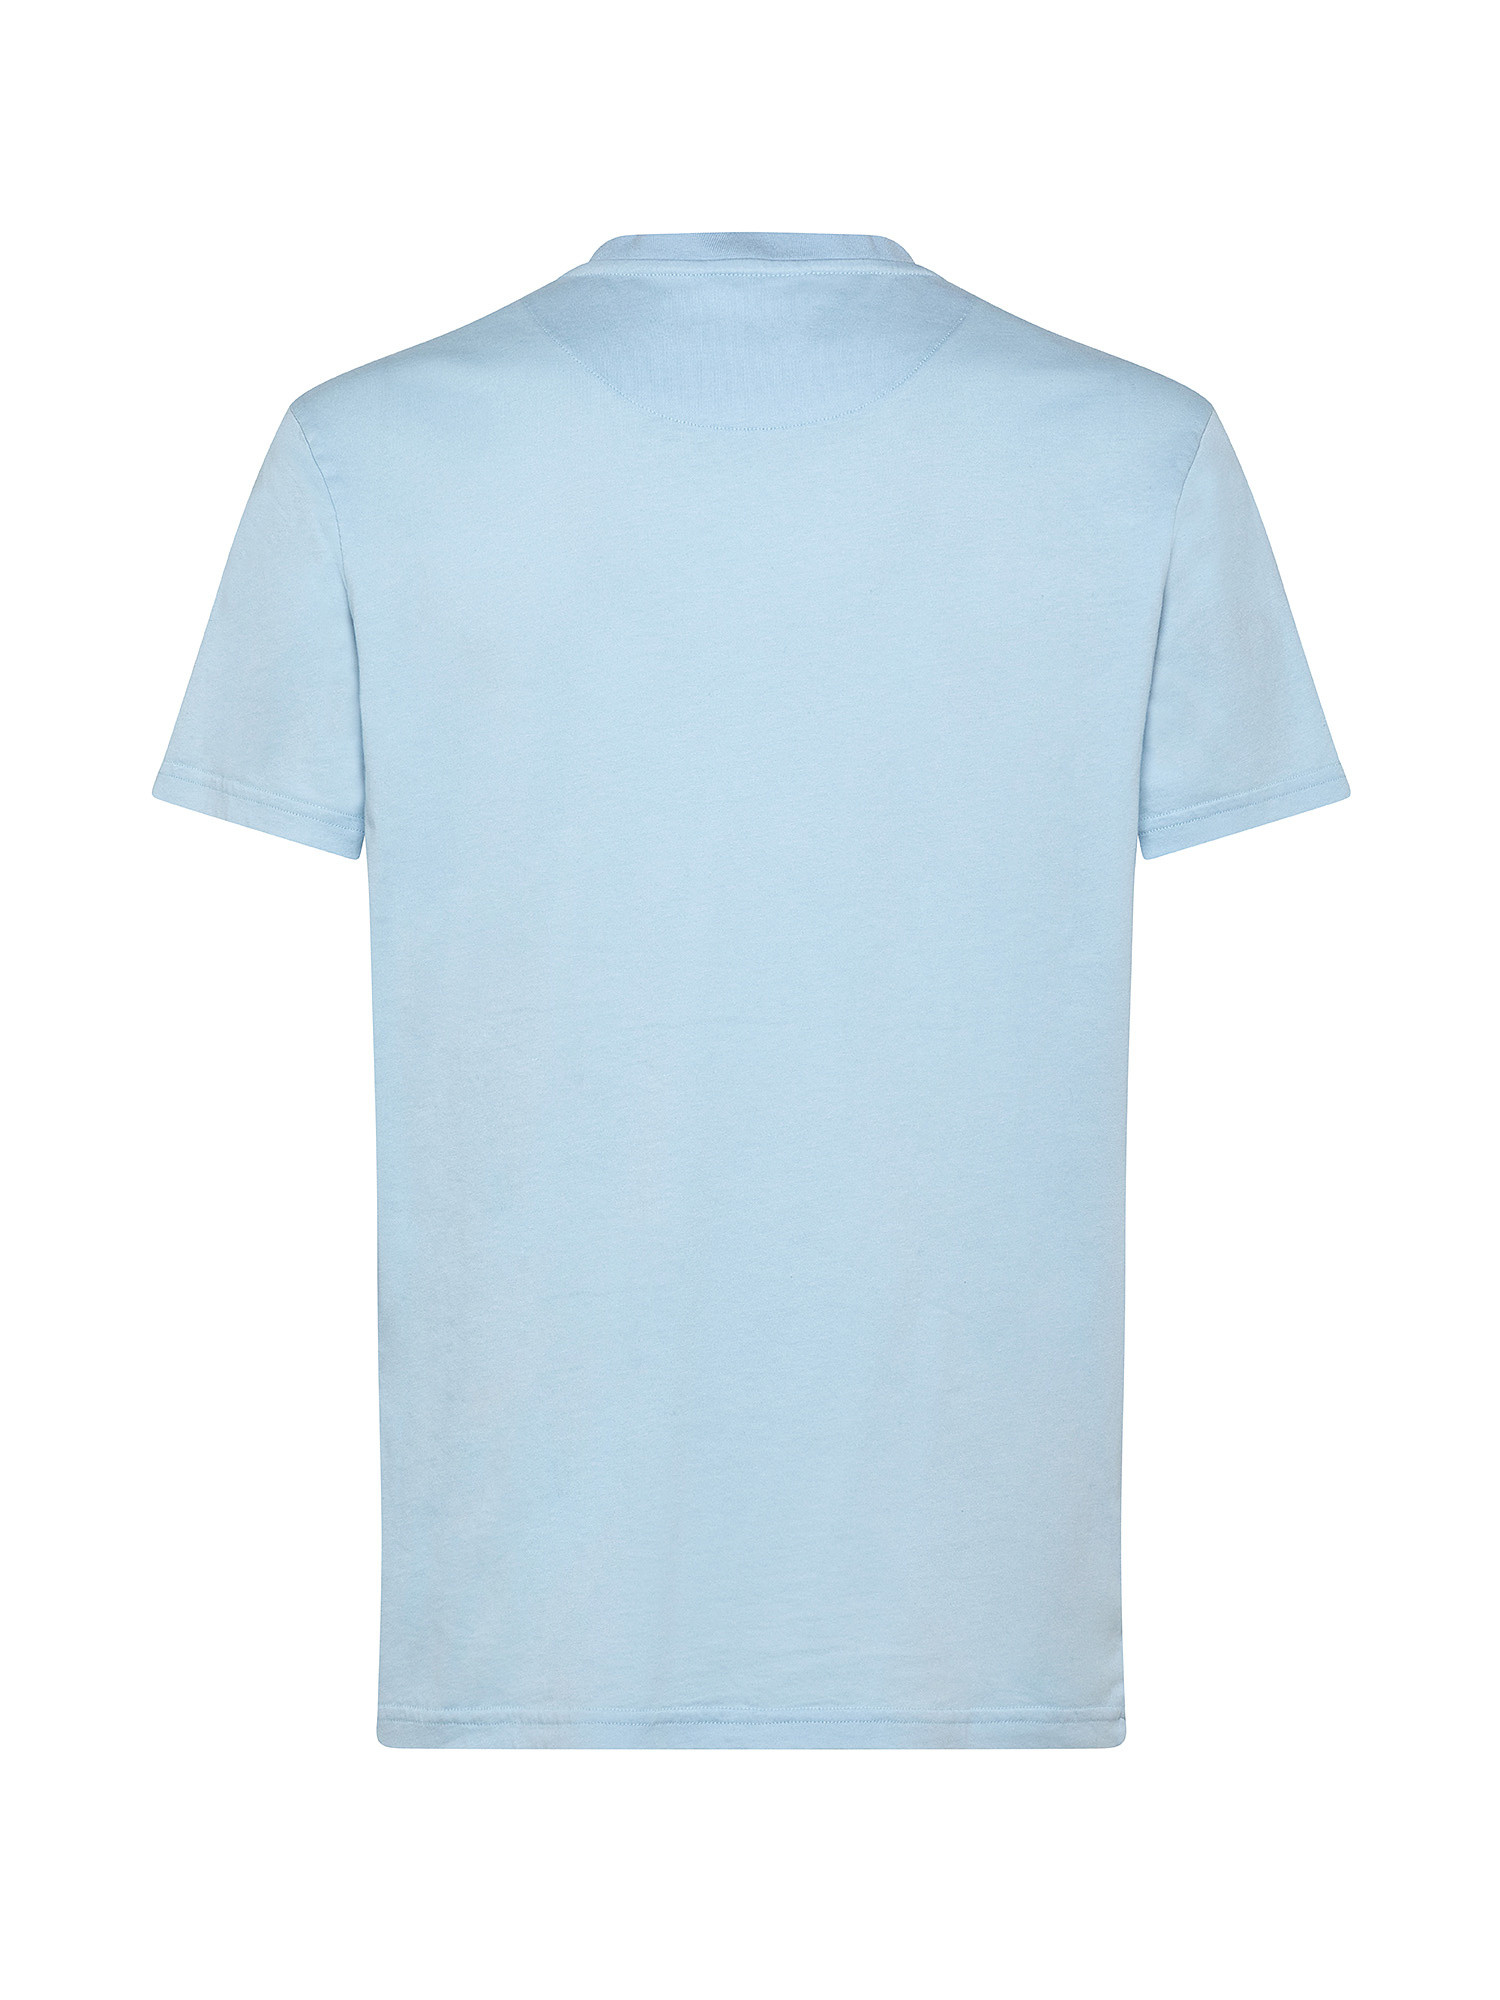 T-shirt girocollo, Azzurro, large